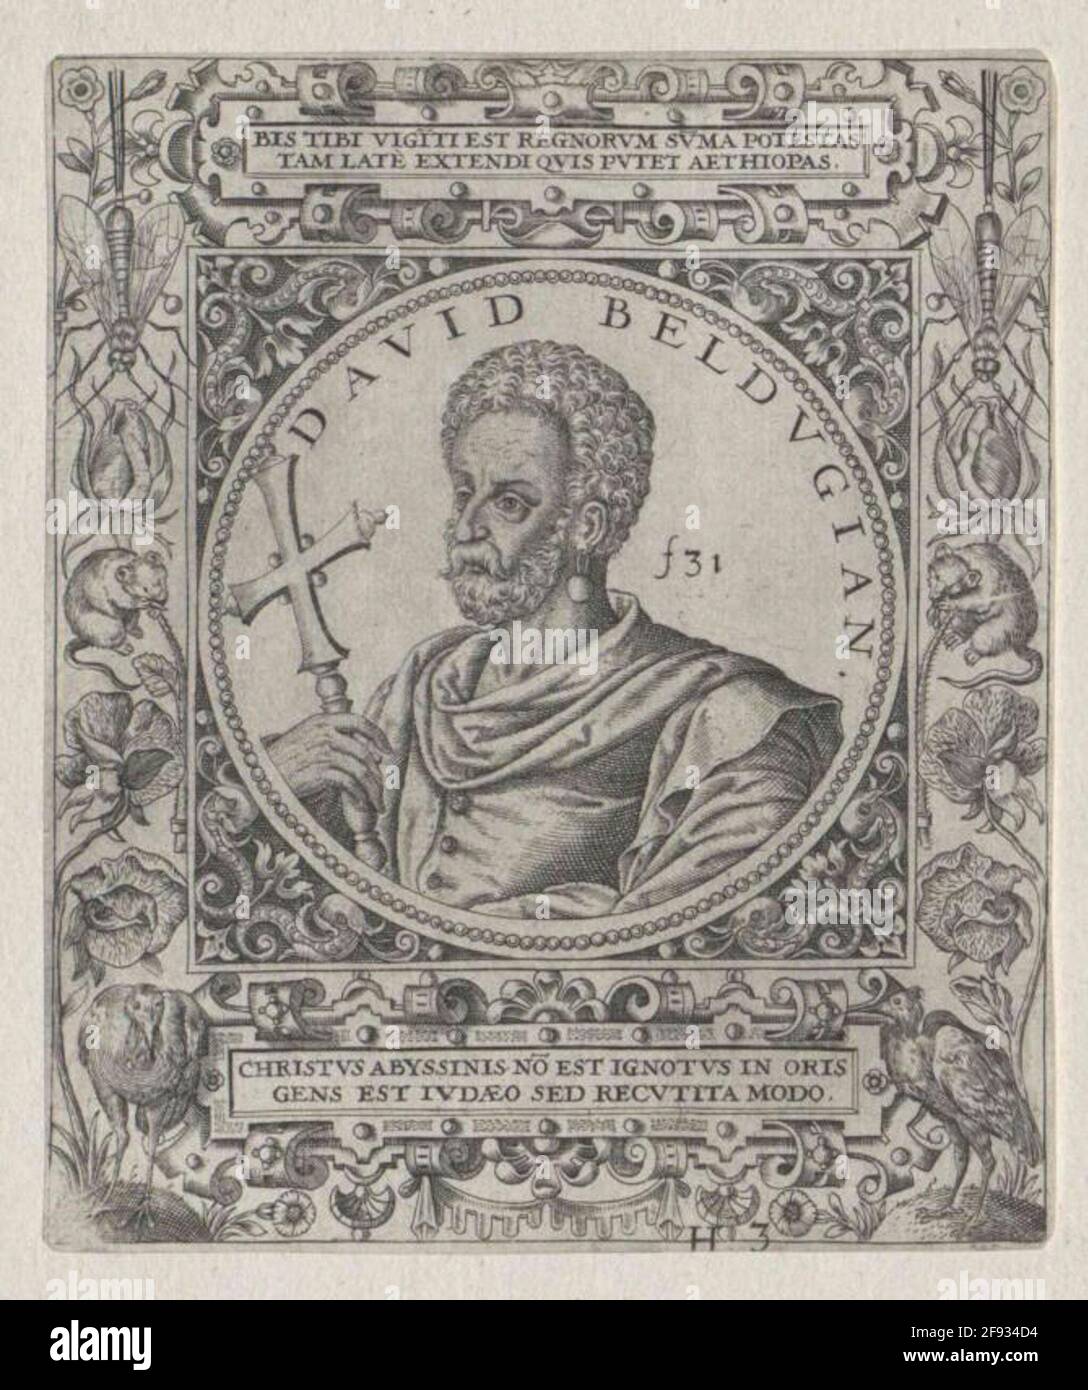 David II, Emperor of Abyssinia. Stock Photo